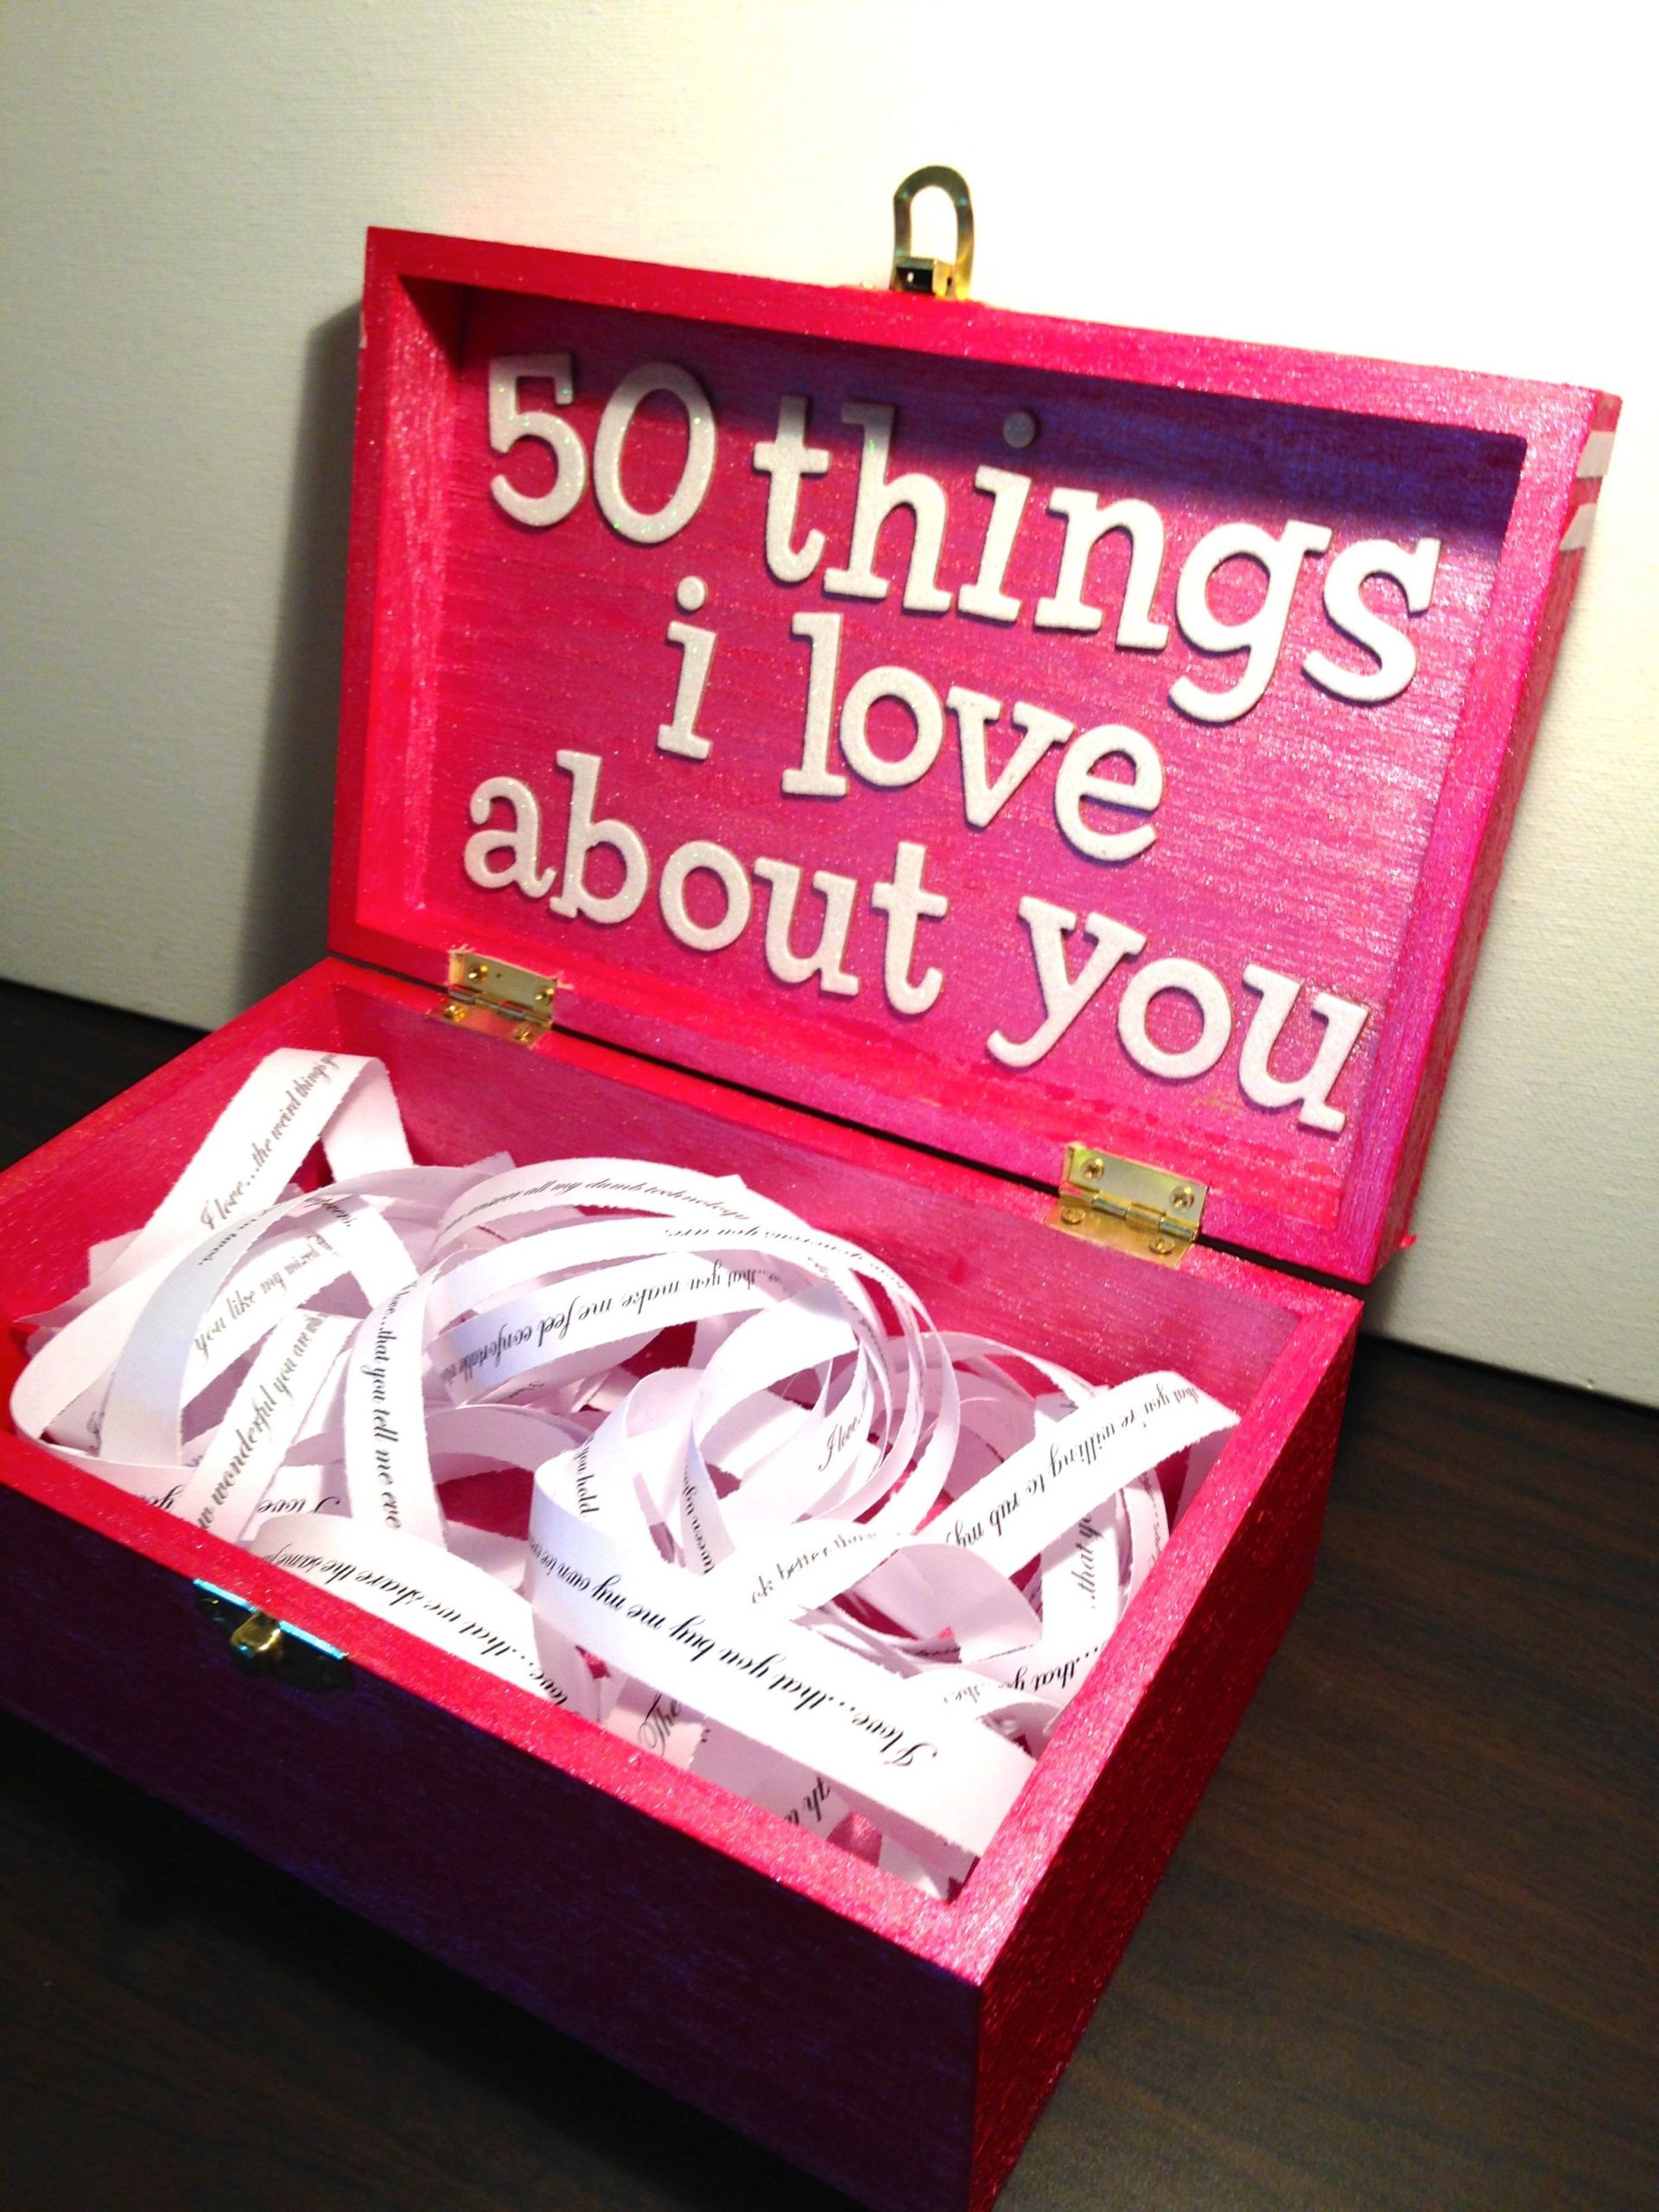 Girlfriend Birthday Gift Ideas Romantic
 Boyfriend Girlfriend t ideas for birthday valentine